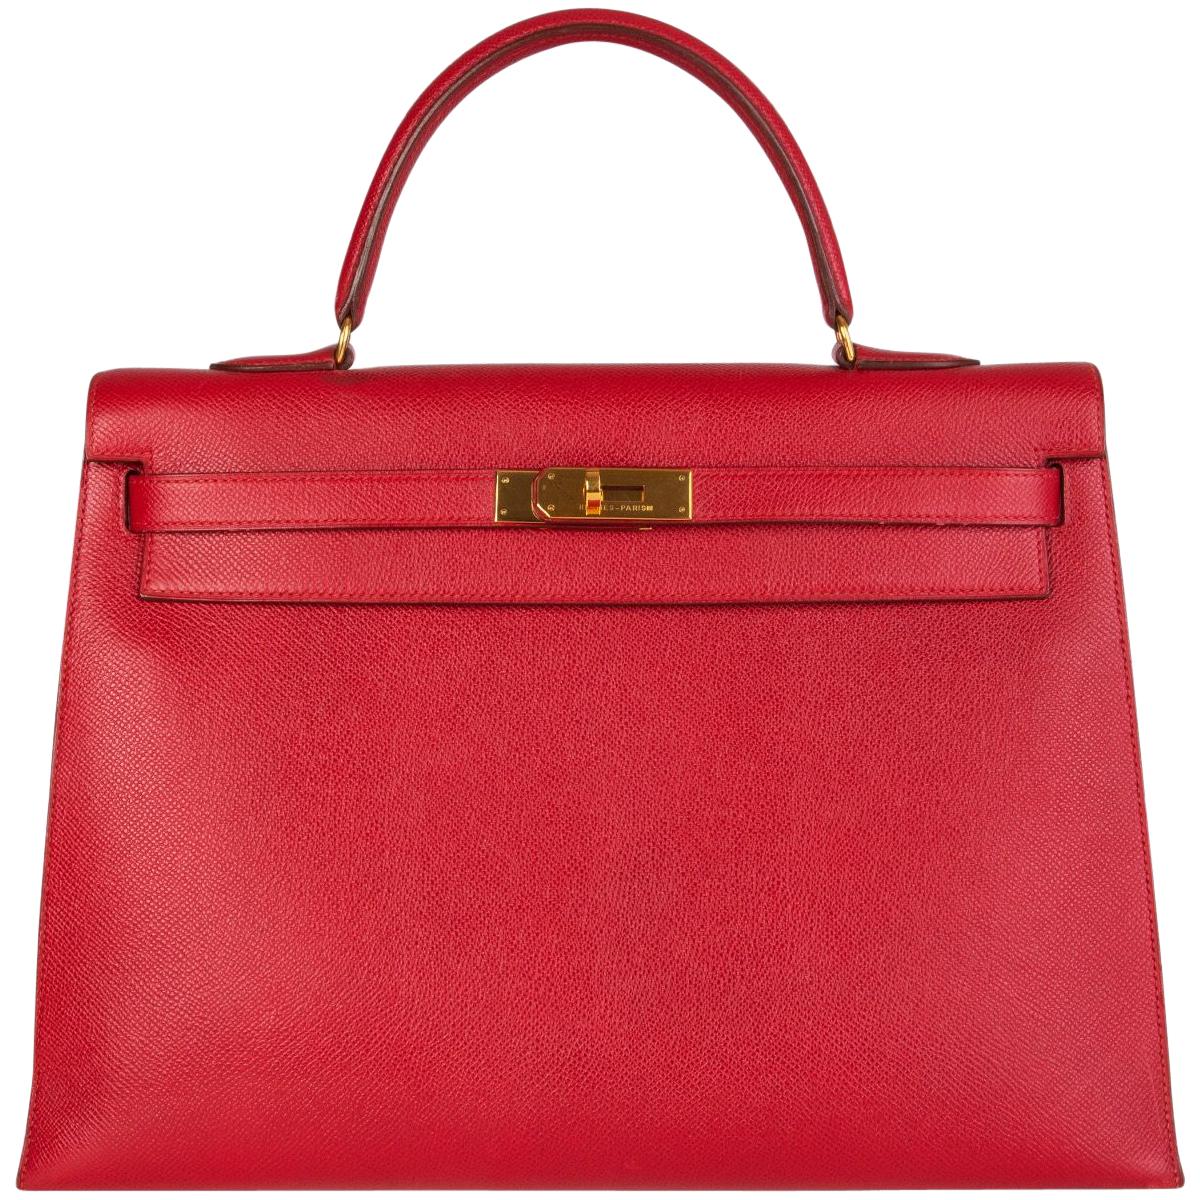 HERMES Rouge Vif red leather KELLY 35 SELLIER Bag